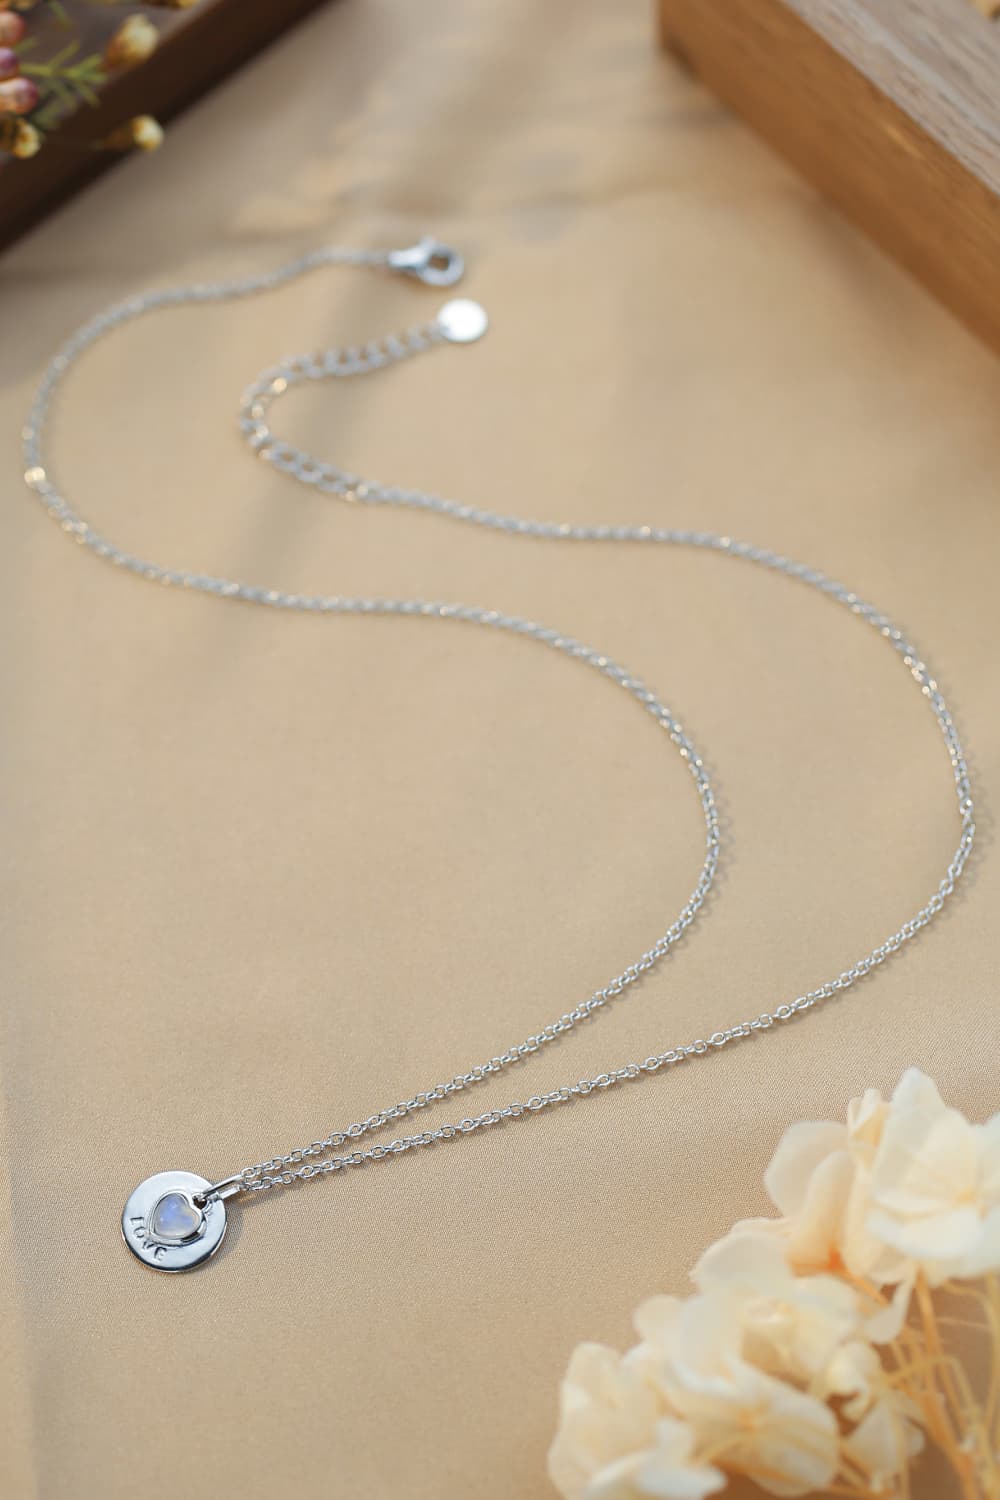 JA Heart Moonstone LOVE Pendant Silver Necklace